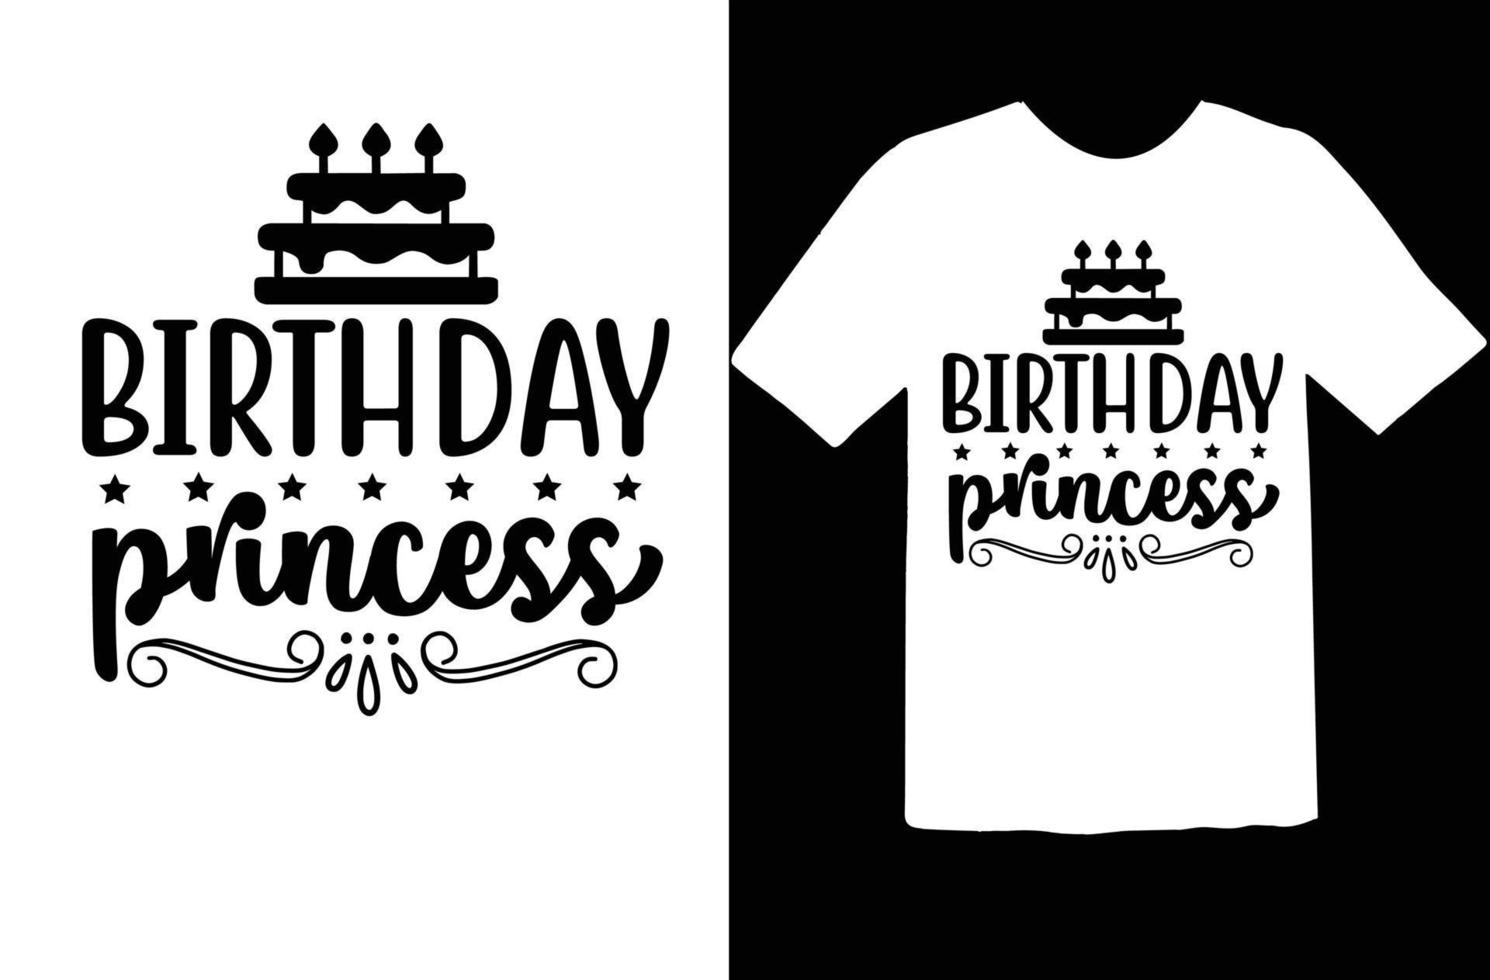 Birthday svg t shirt design vector